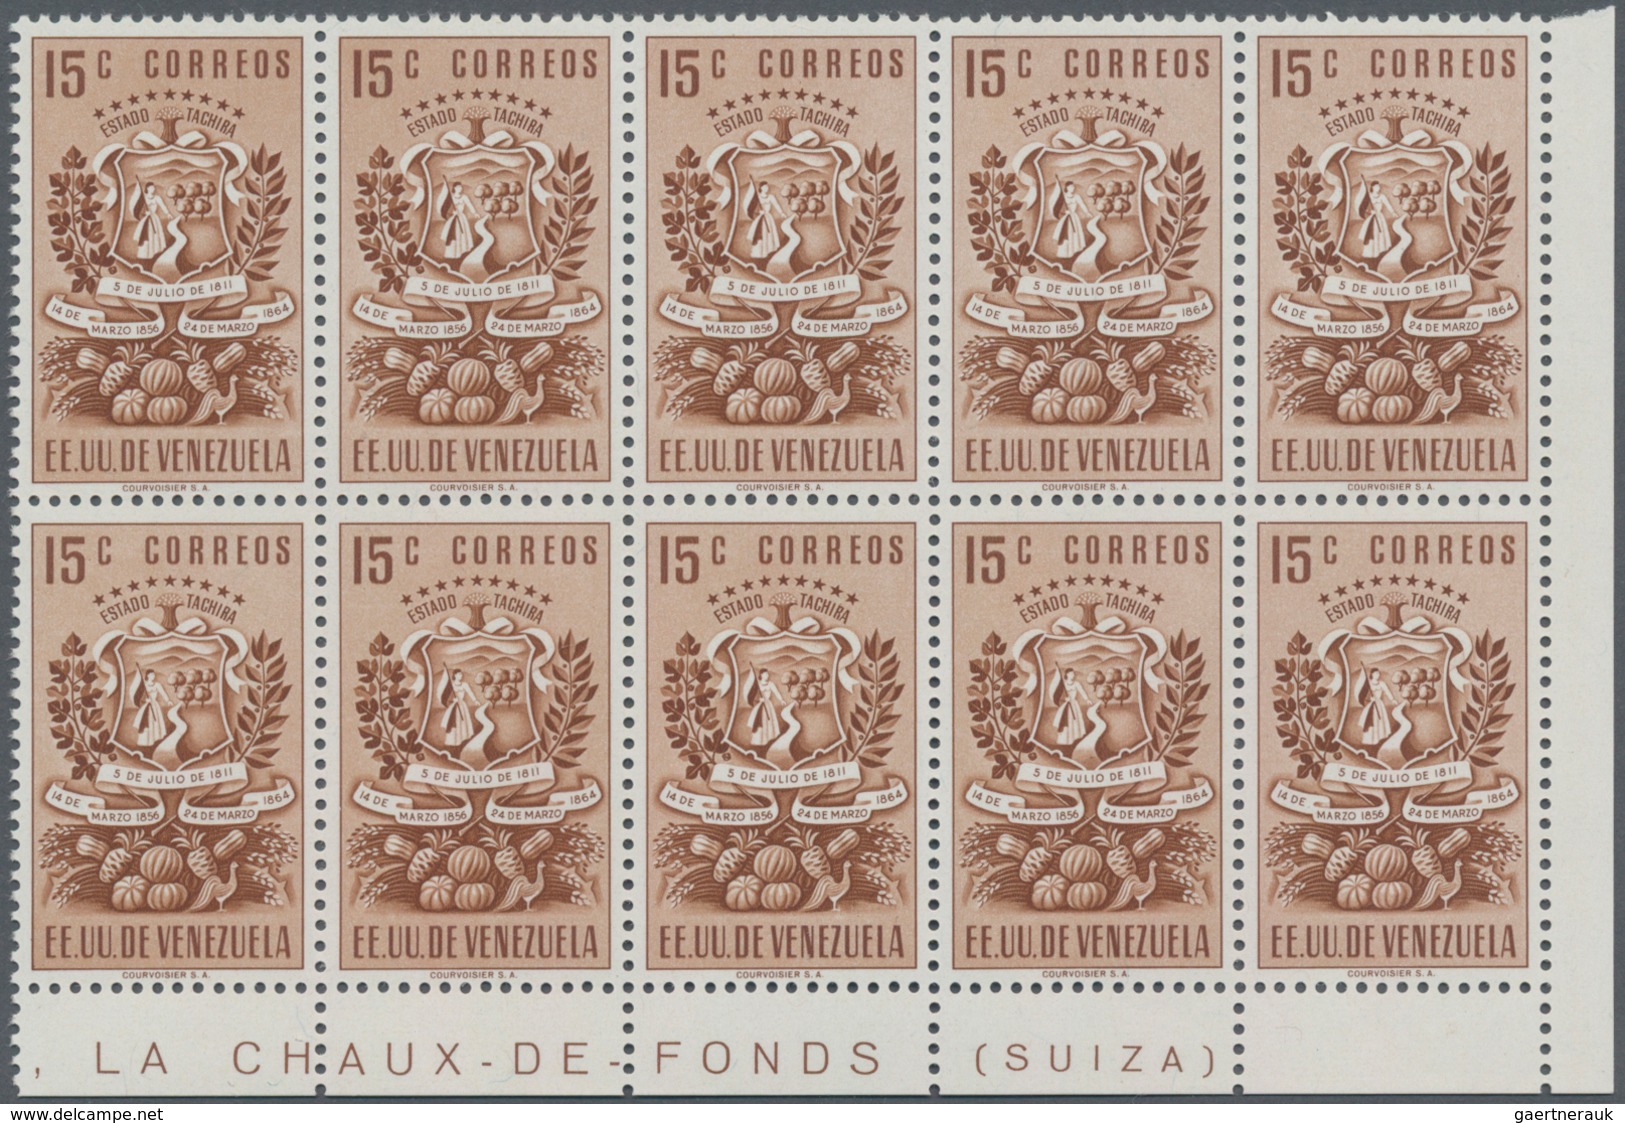 Venezuela: 1951, Coat of Arms ‚TACHIRA‘ normal stamps complete set of seven in blocks of ten from lo